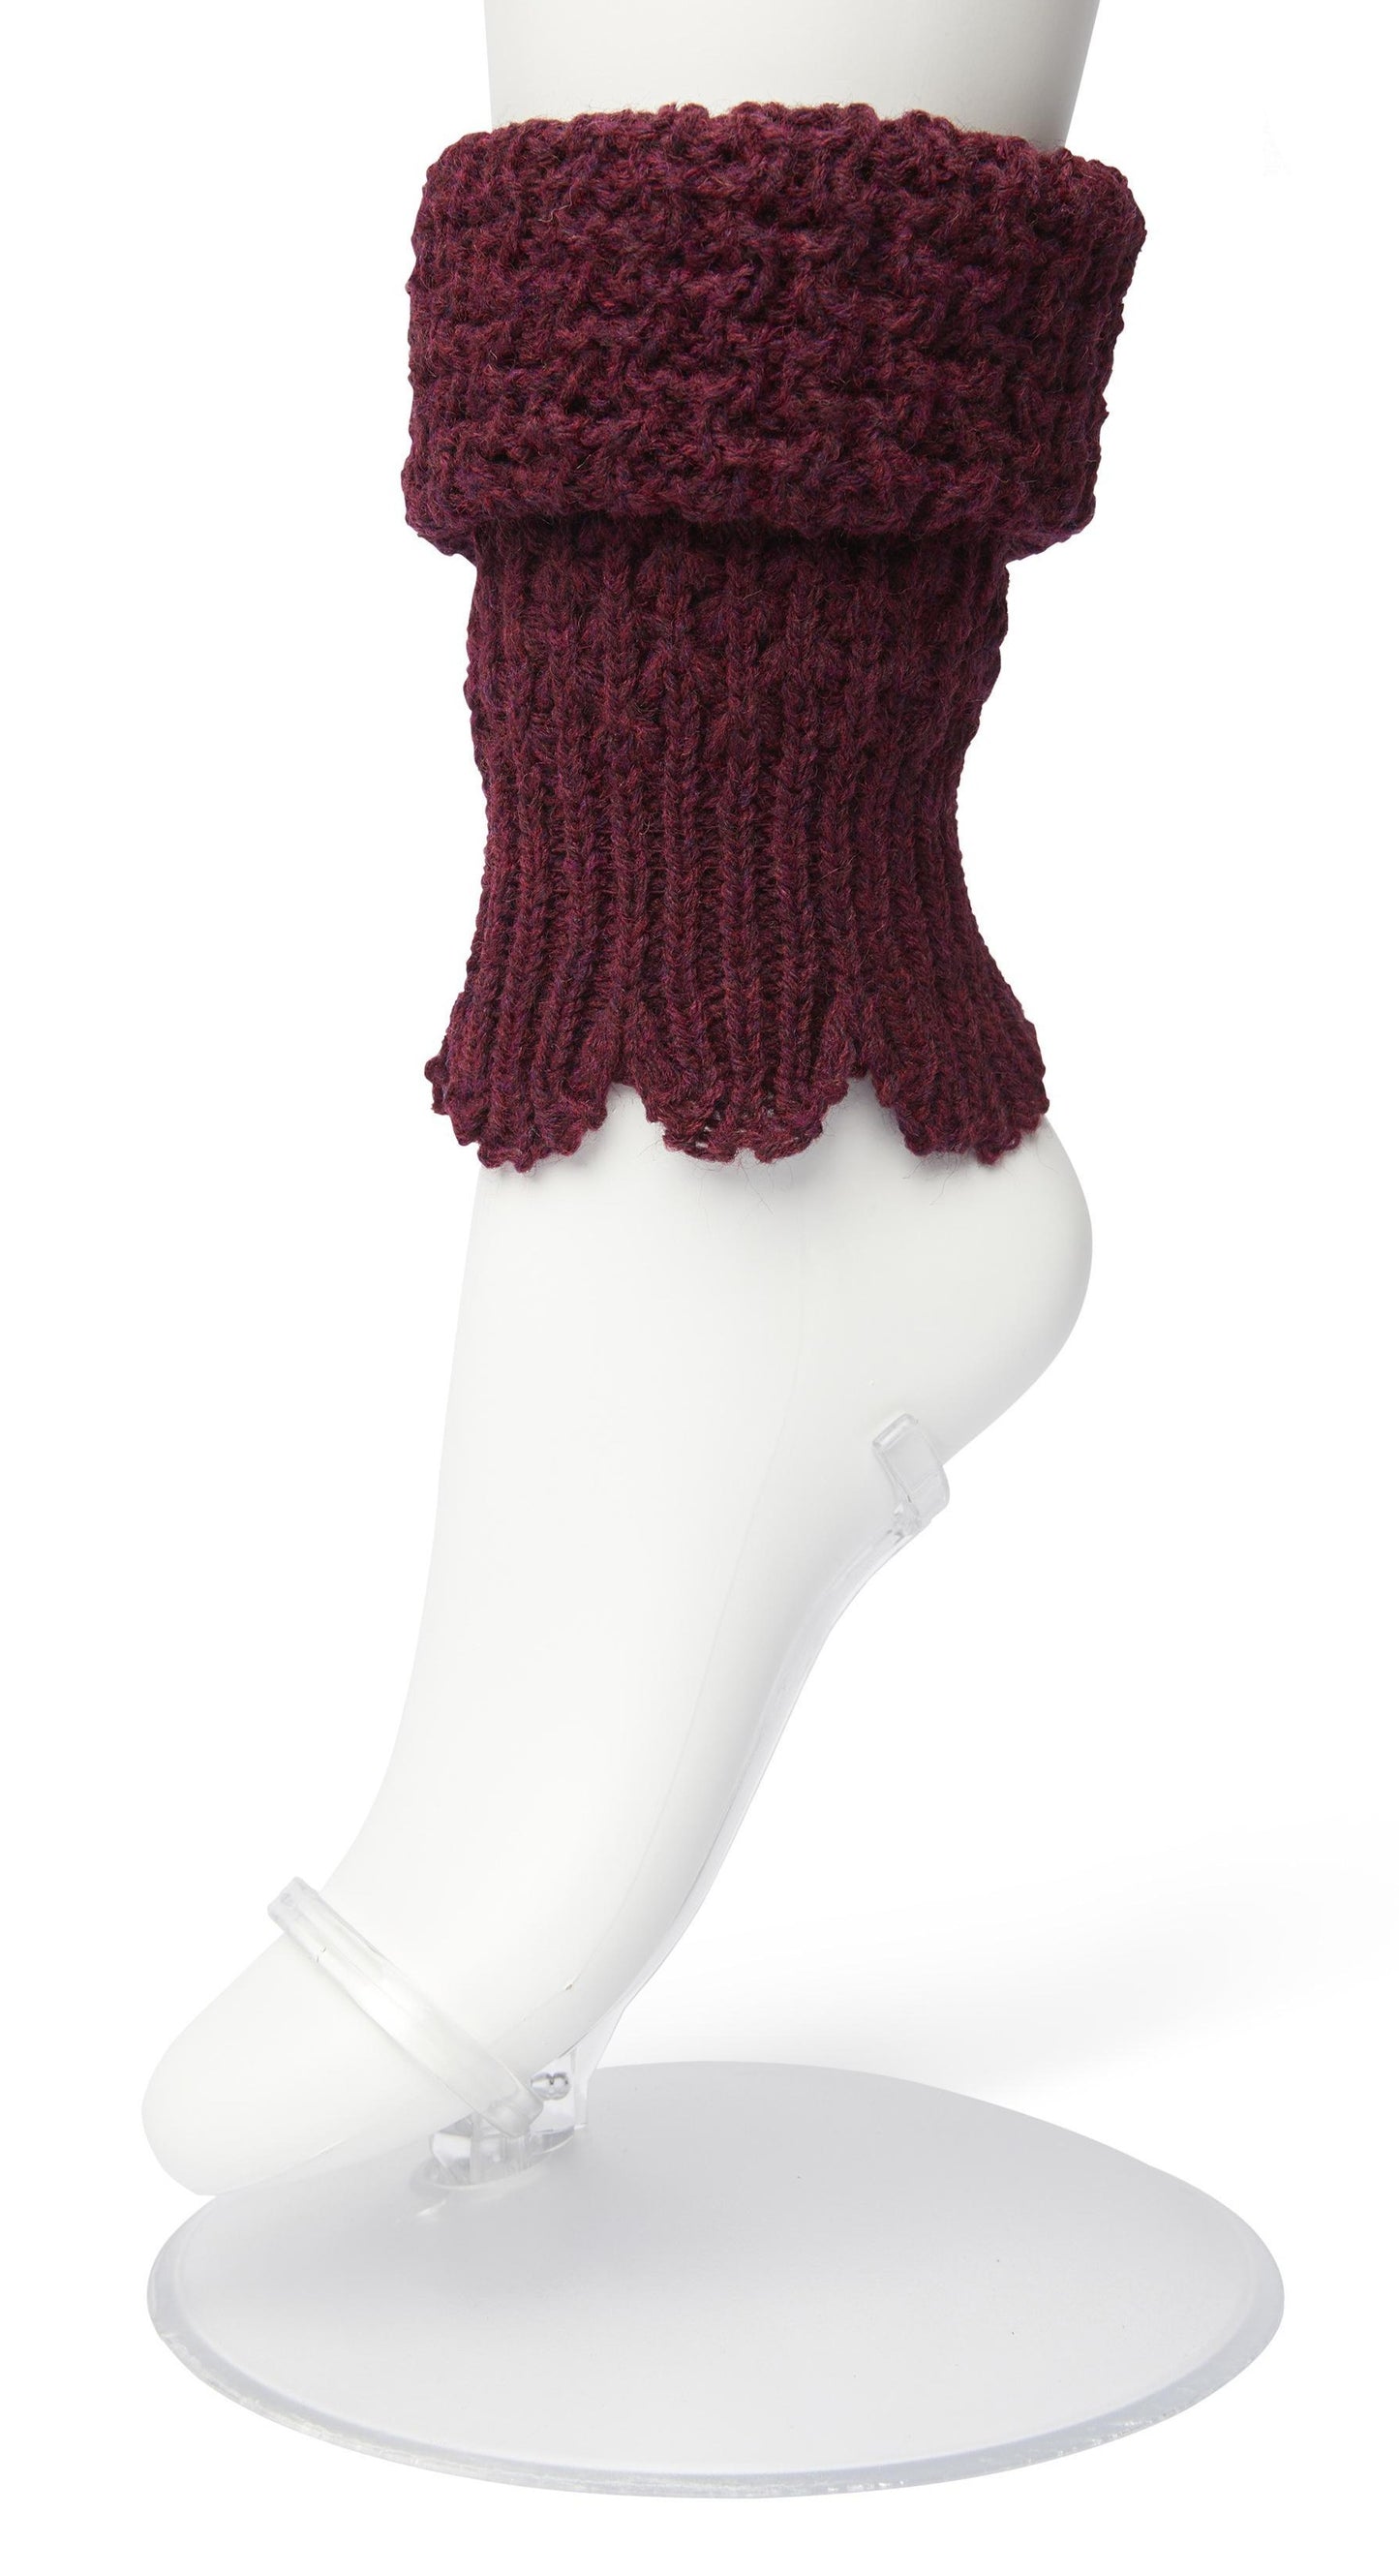 Bonnie Doon - Honeycomb Boot Top BN351789 - wine burgundy leg warmer boot cuff